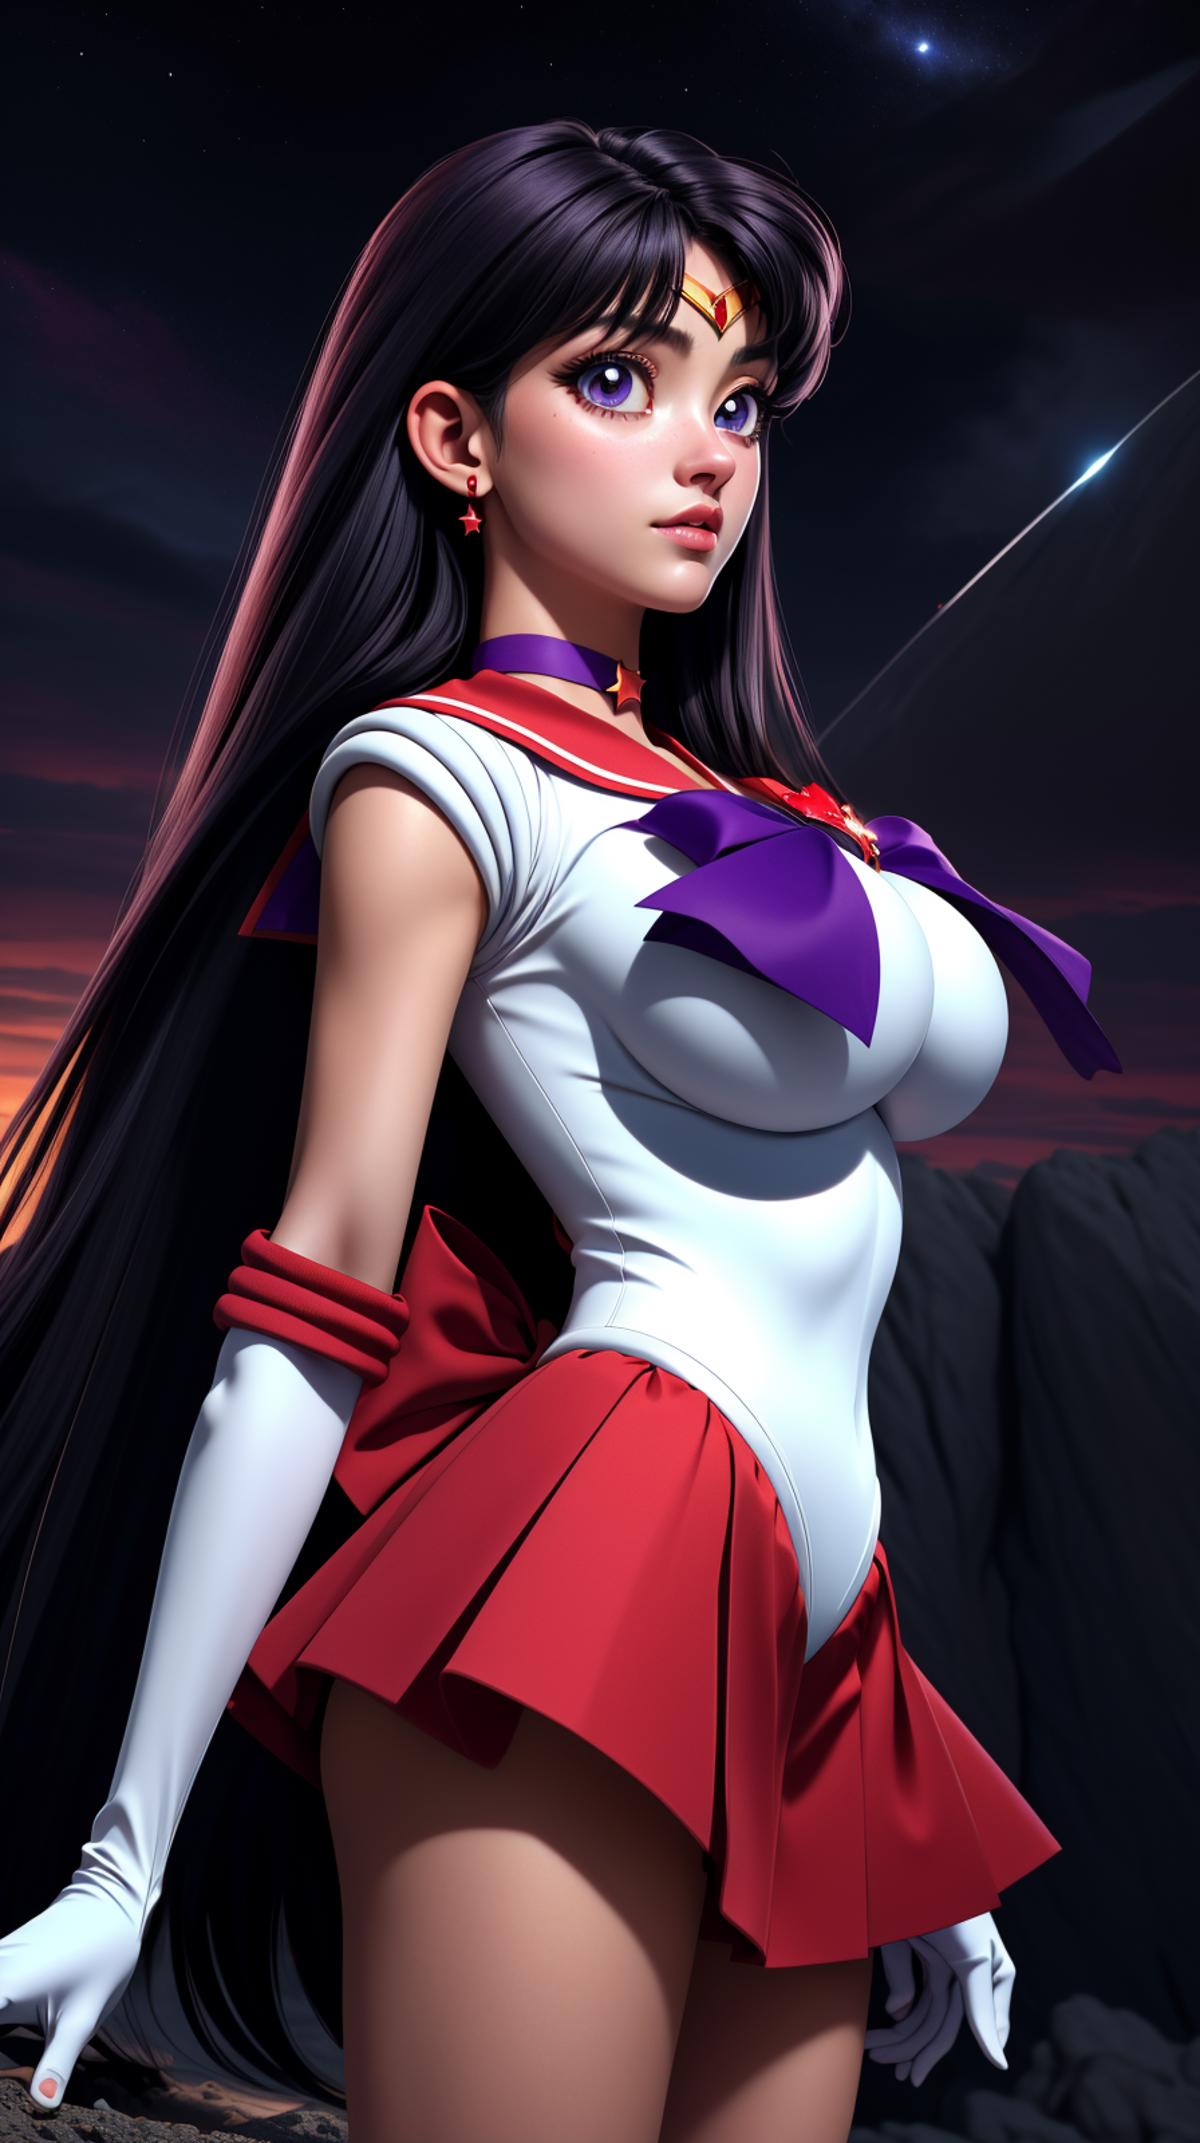 Rei Hino (Fanart) - Sailor Moon image by SexyToons